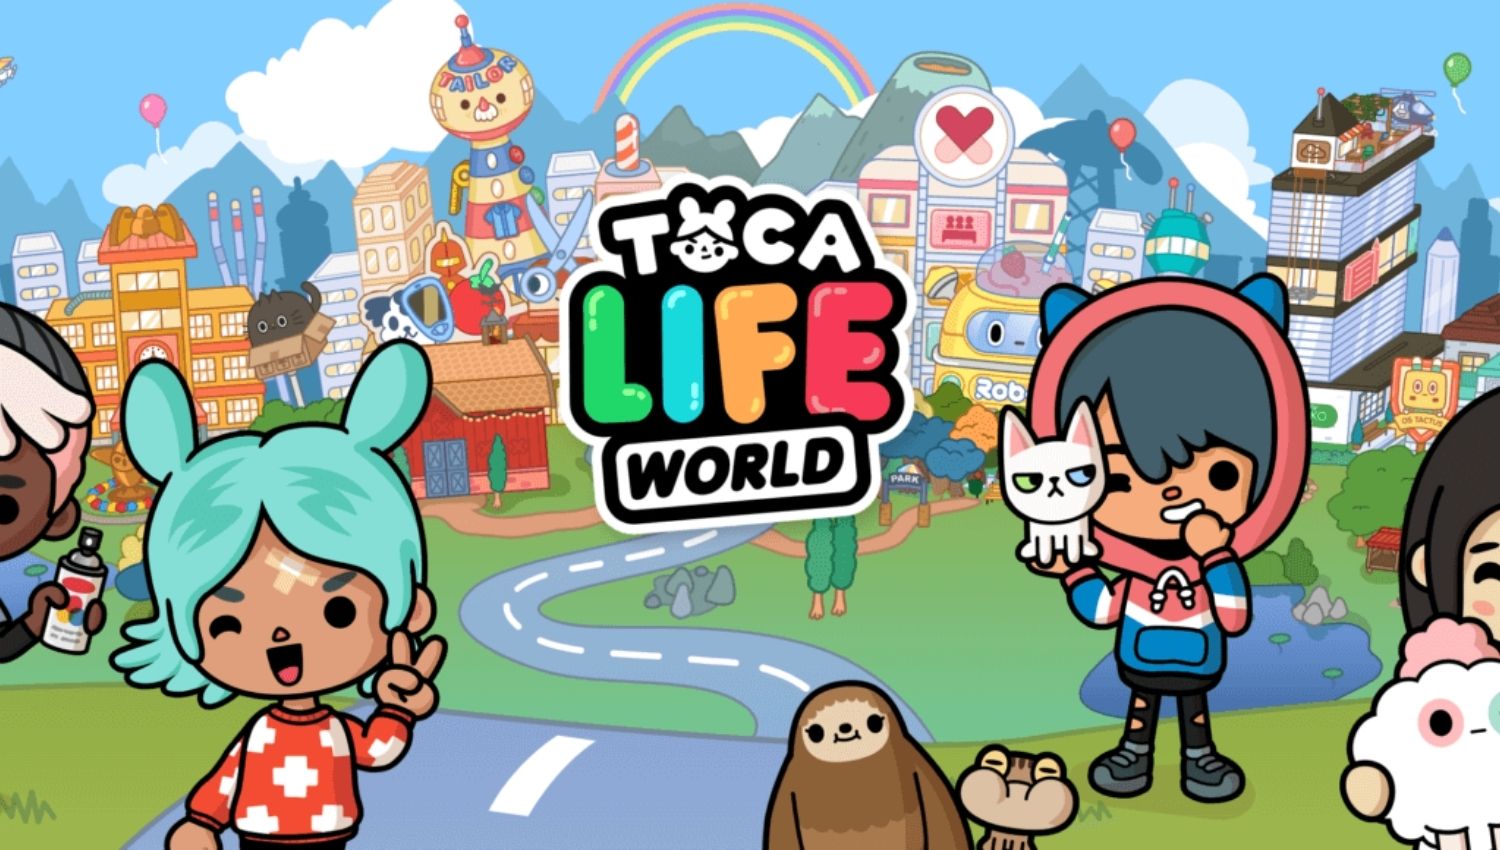 Toca Life World: Game Secrets You Should Know Online